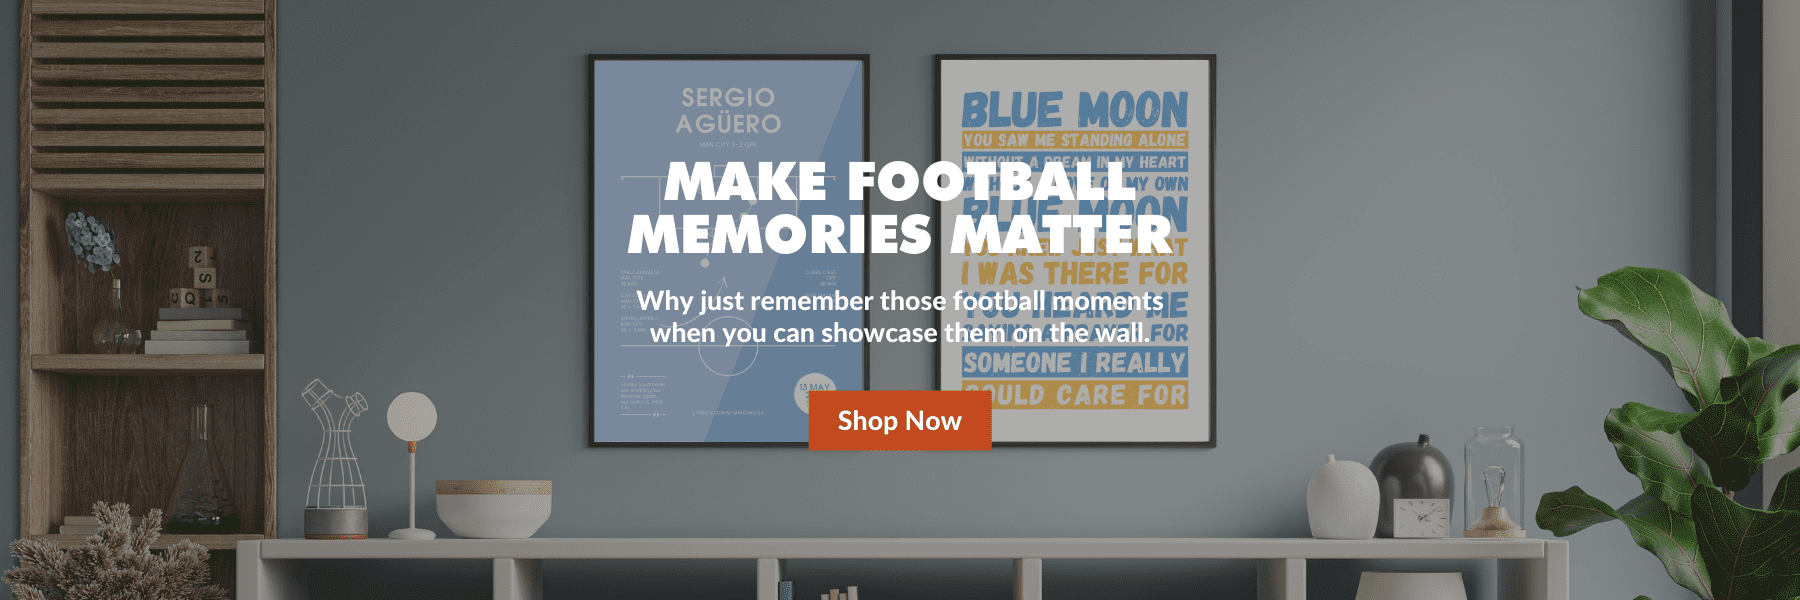 slide-2-make-football-memories-matter-showcase-them-on-the-wall-personalise